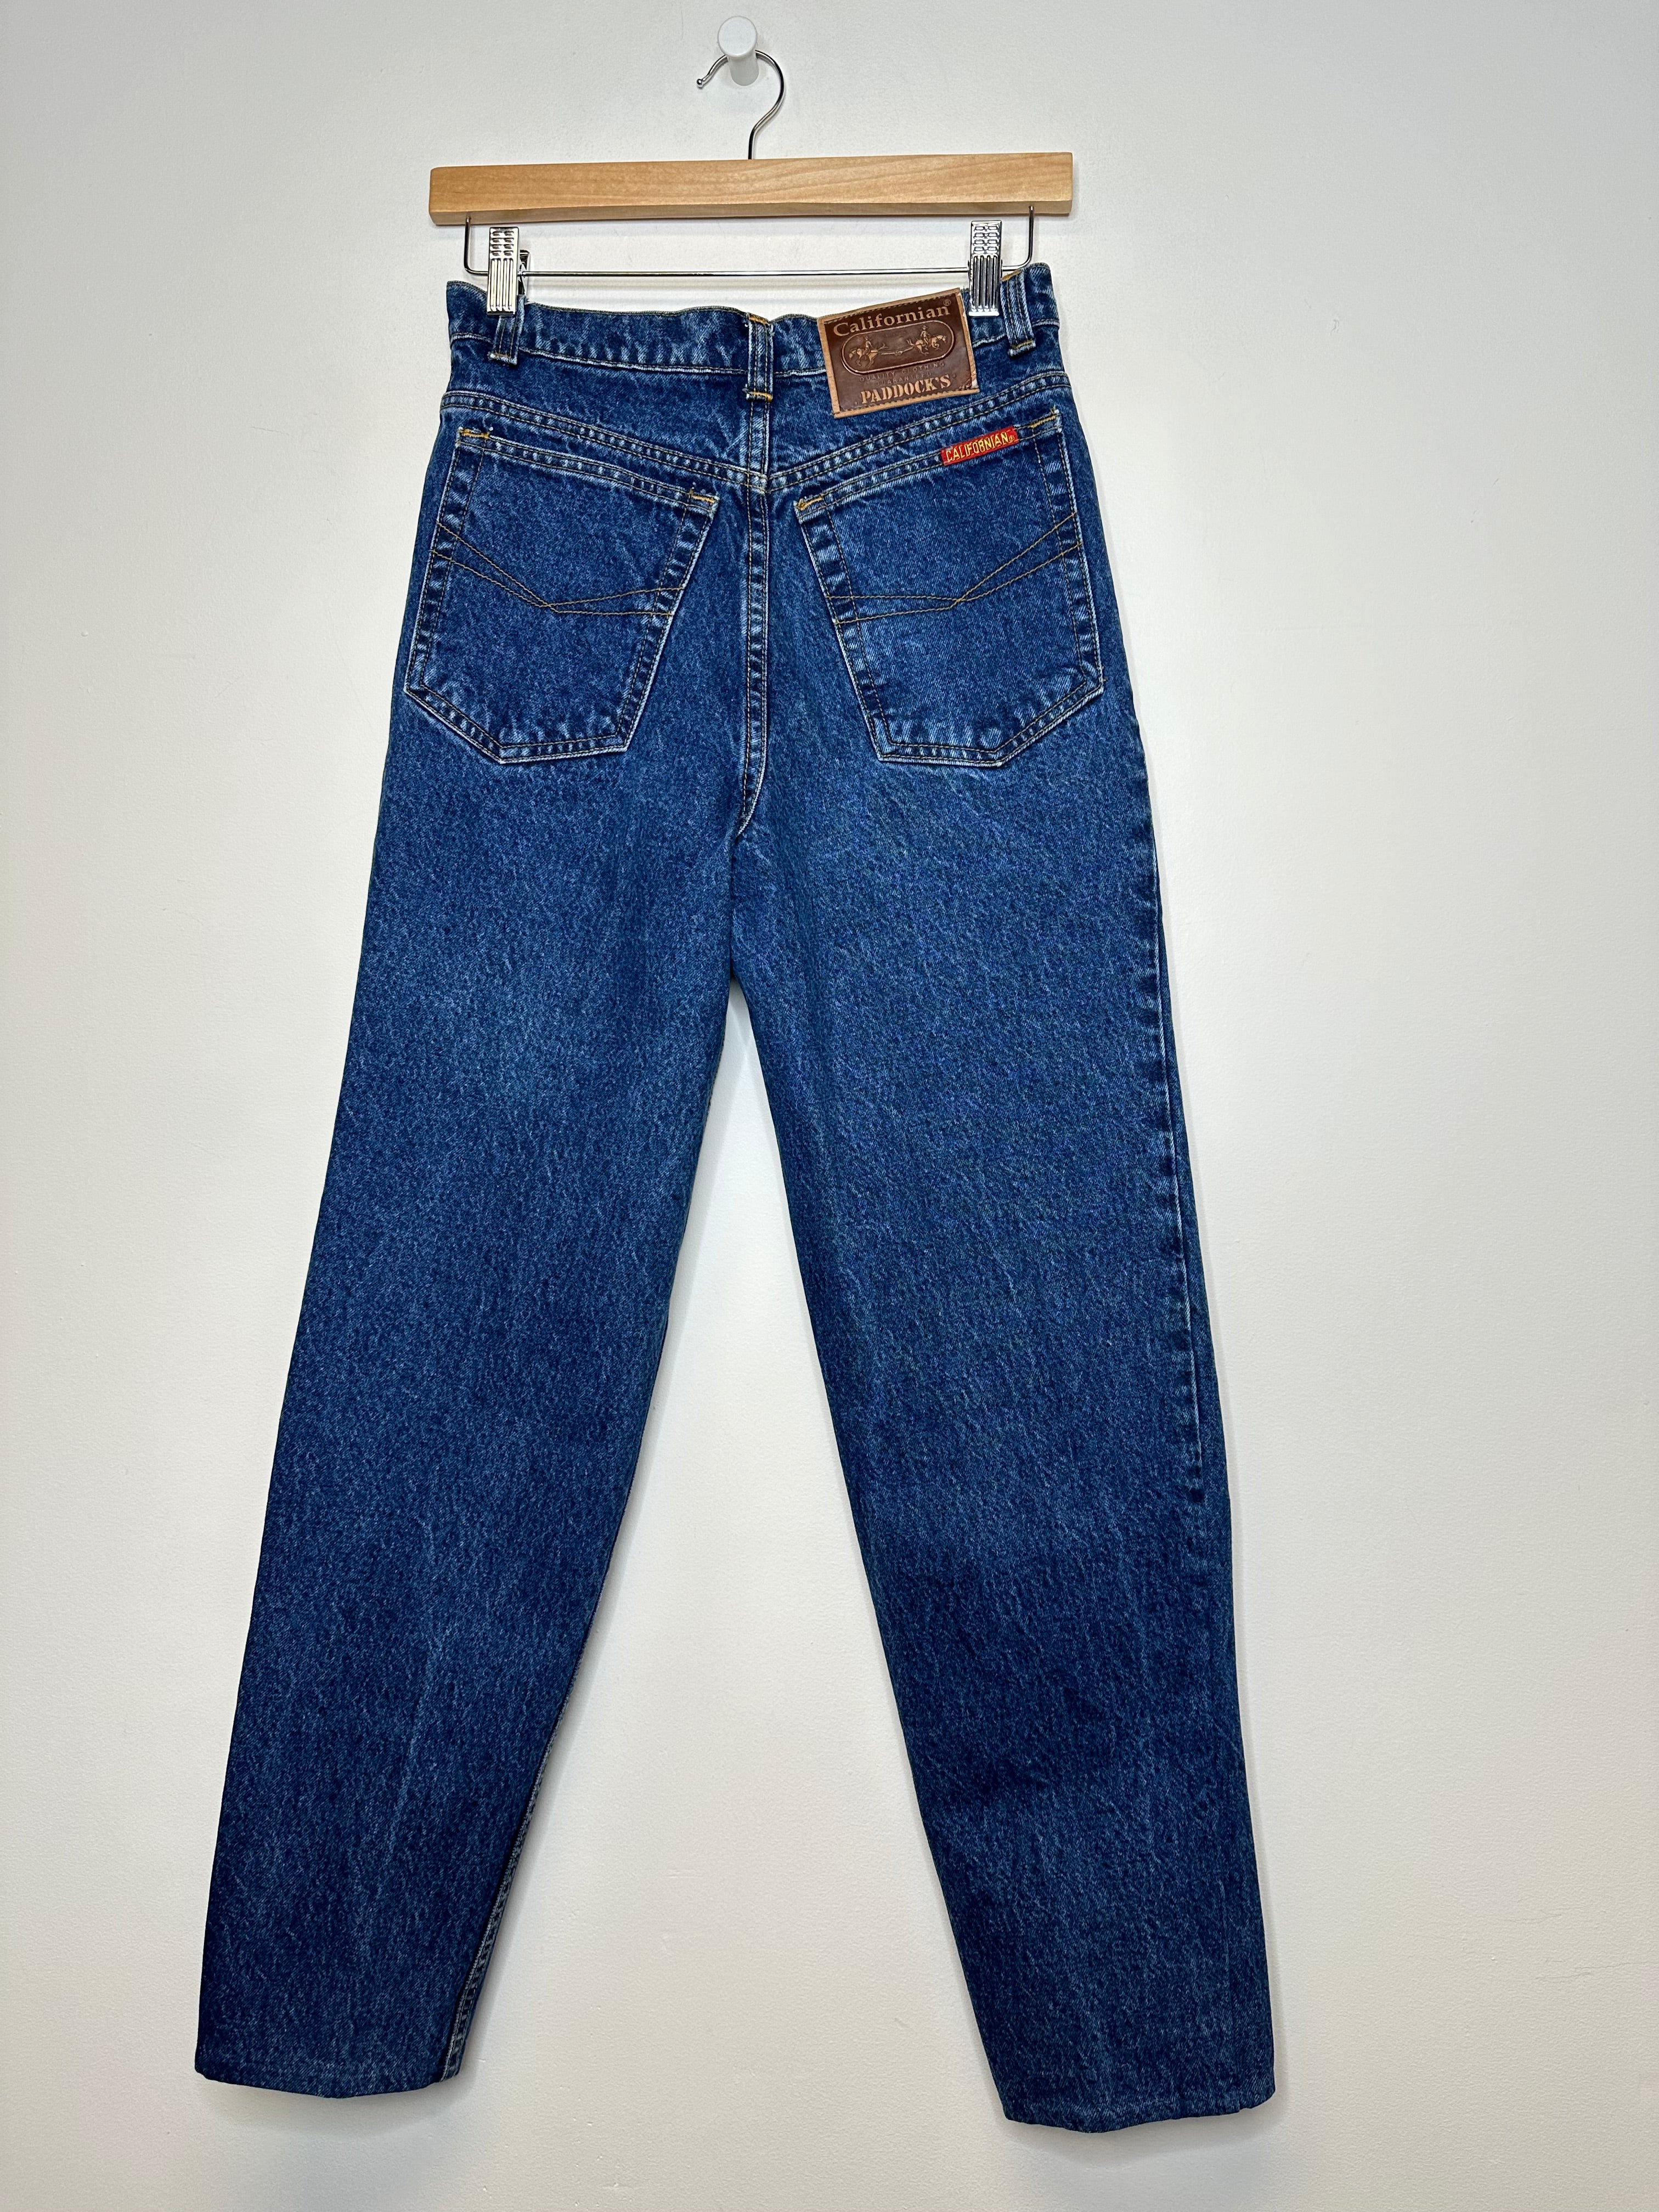 Vintage Blue Jeans - 26